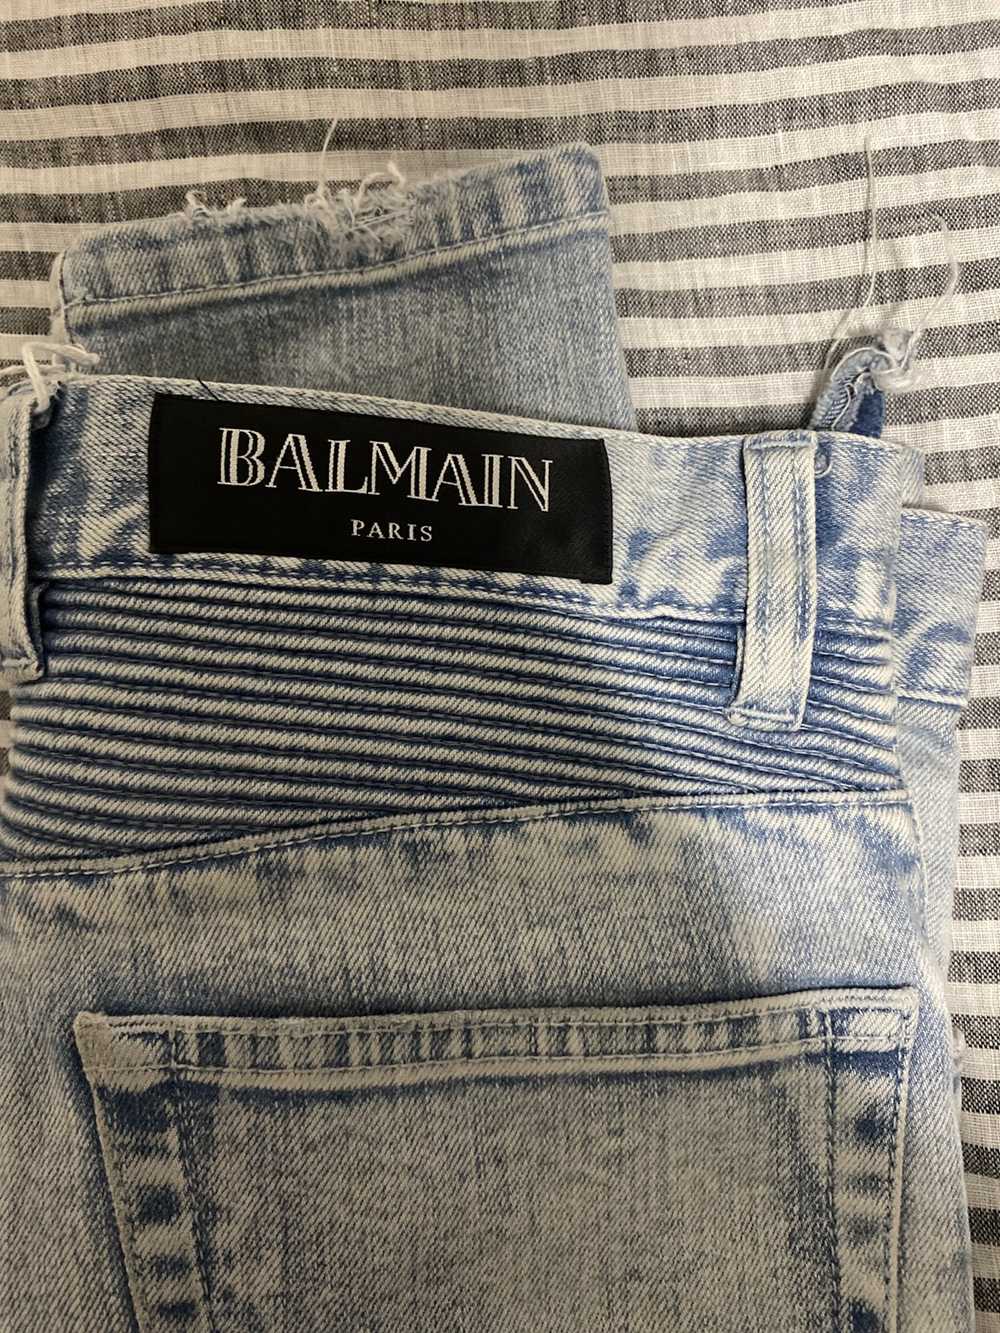 Balmain Balmain Light Blue Distressed Jeans - image 3